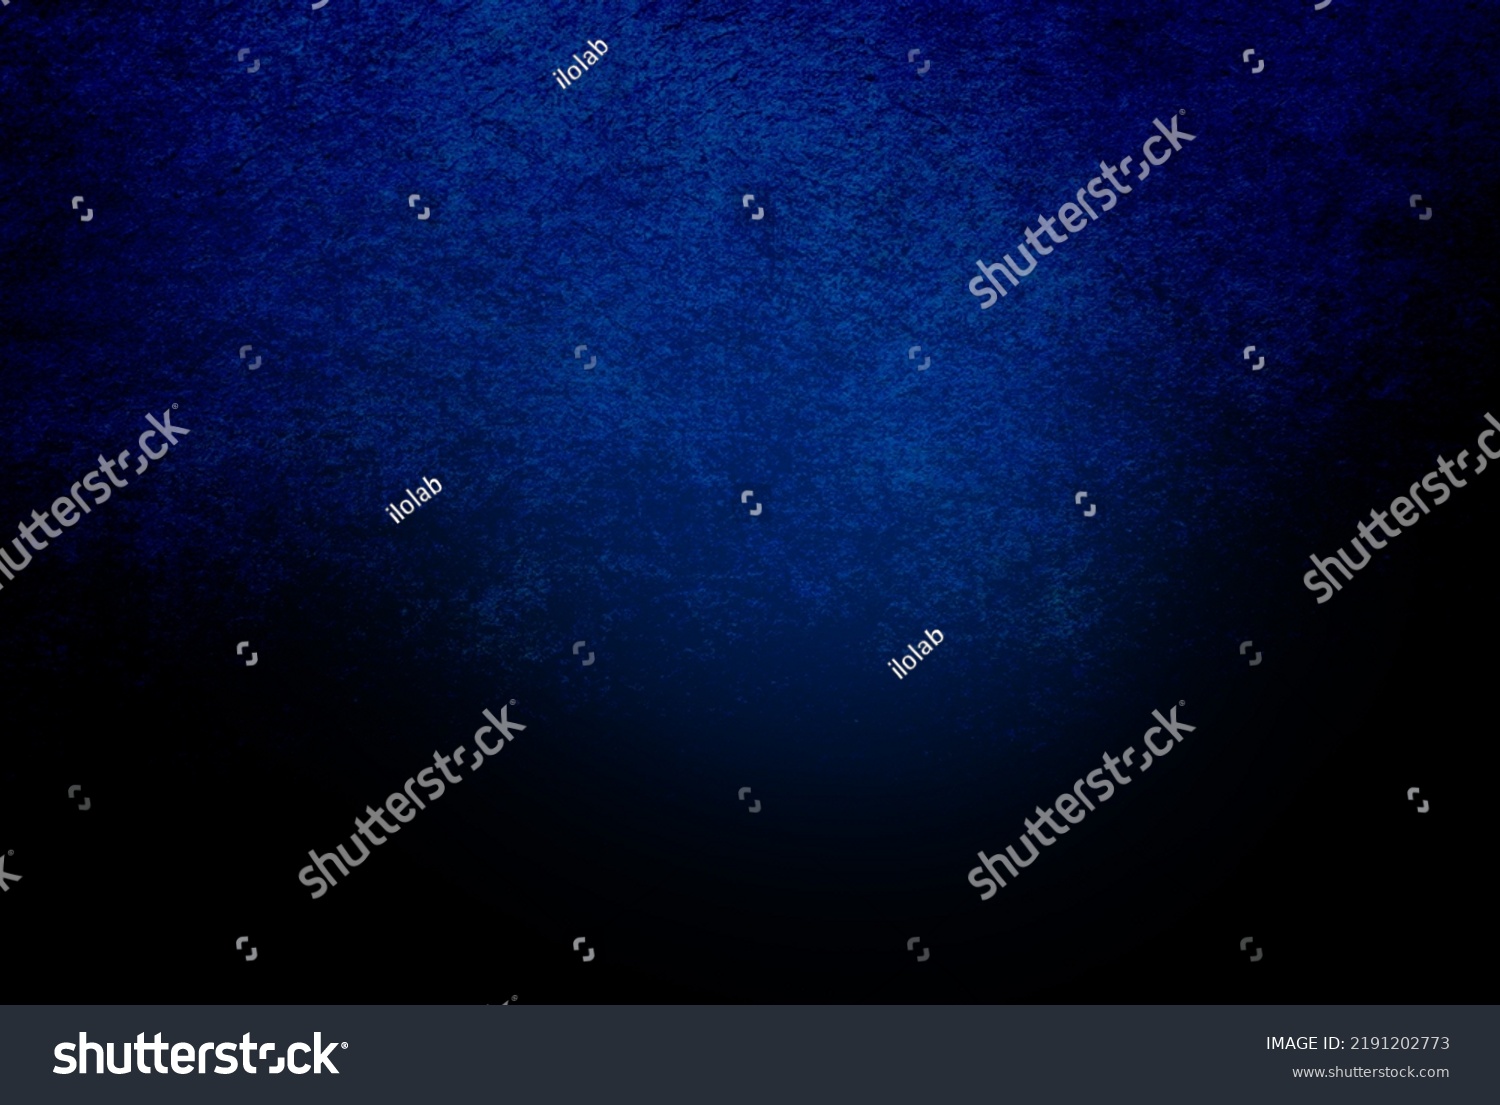 Beautiful abstract grunge decorative navy blue dark wallpaper. #2191202773